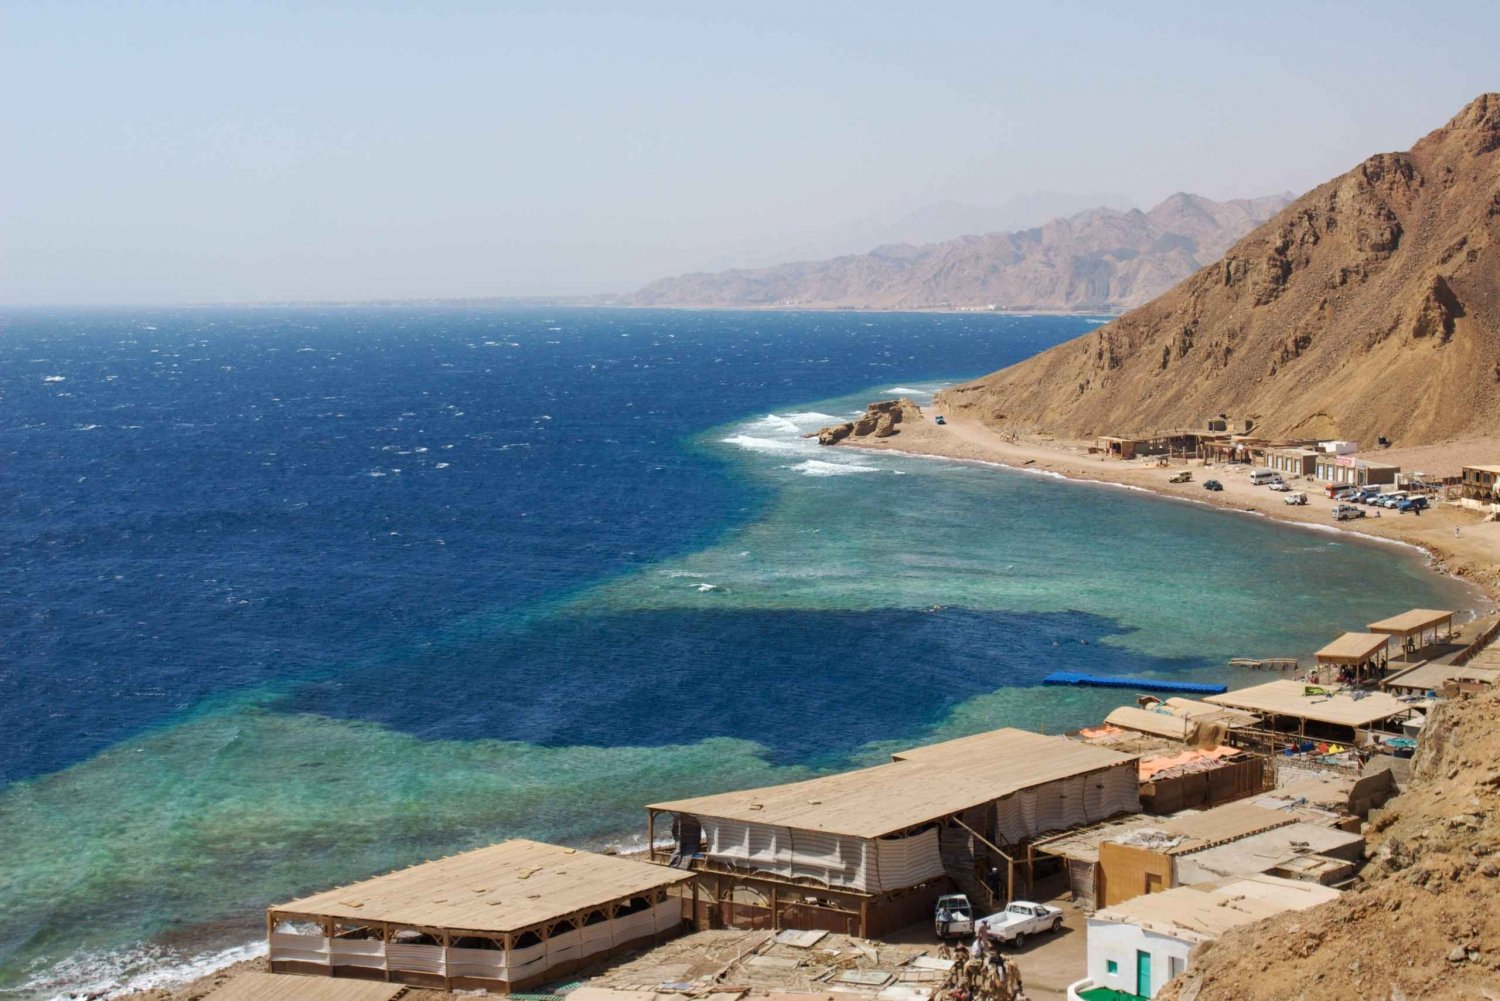 Sharm El Sheikh: Blue Hole Park Day Snorkeling Tour & Lunch